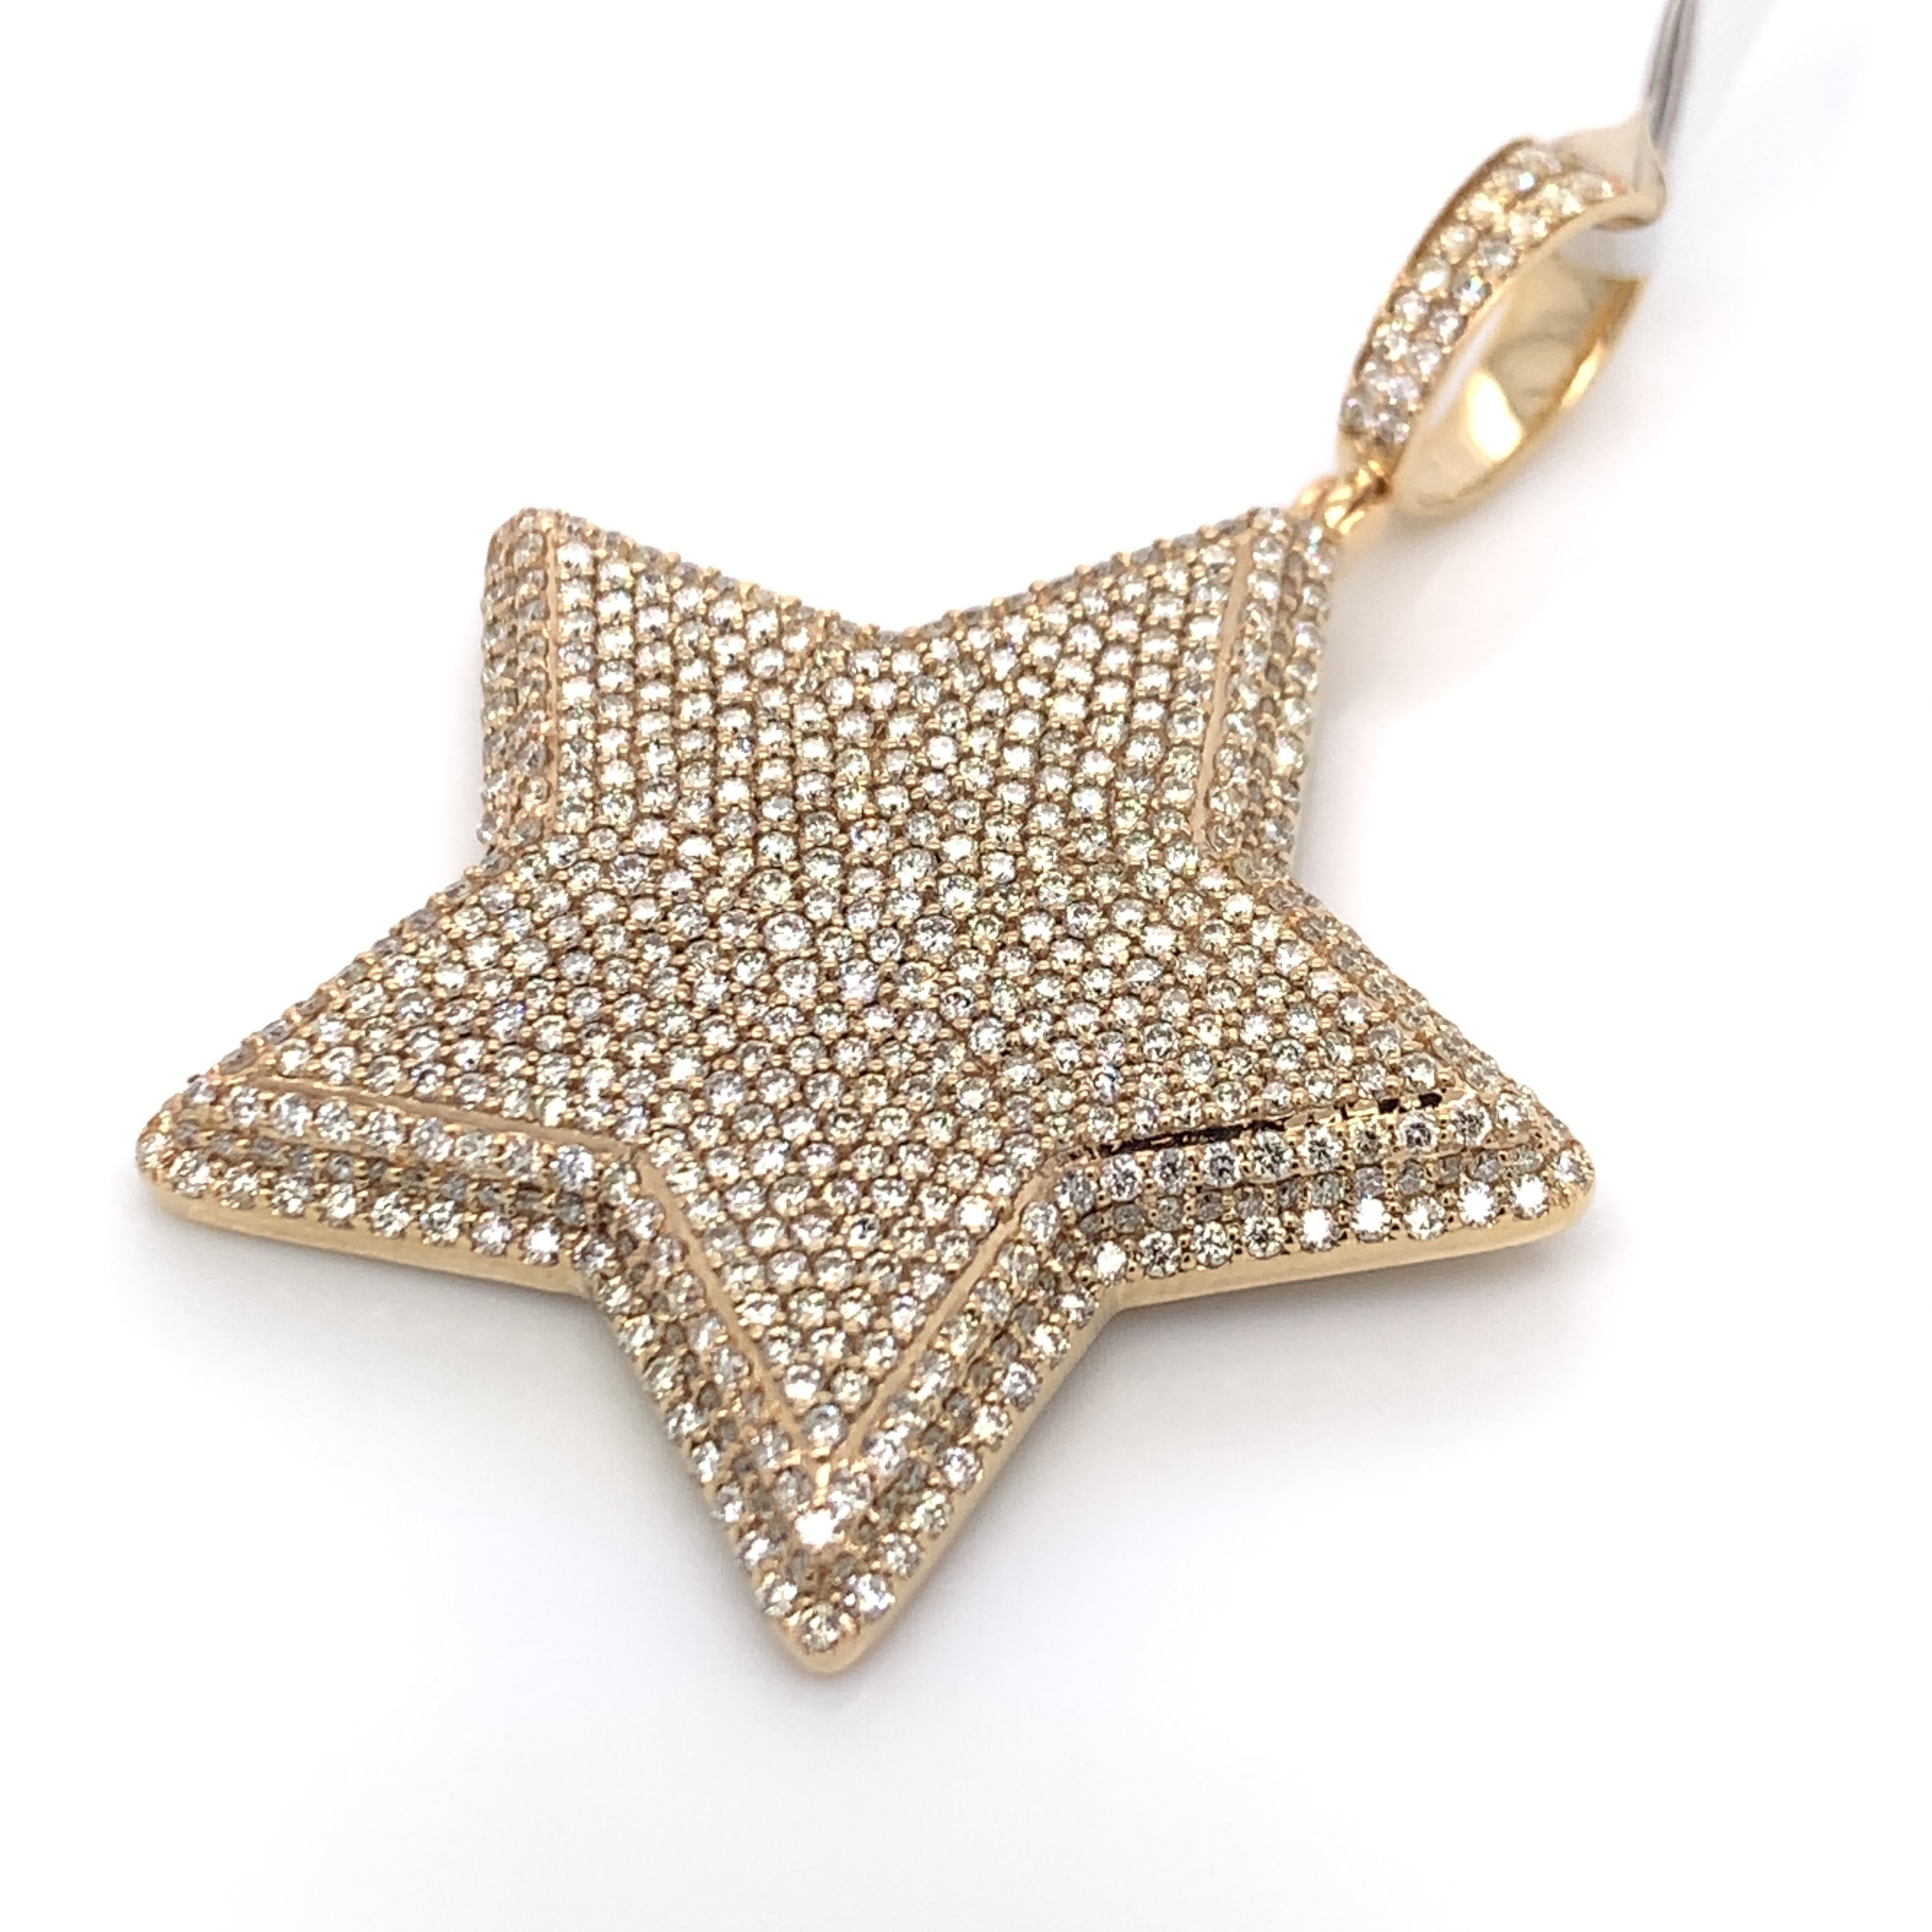 3.50 CT. Diamond Star Pendant in Gold - White Carat - USA & Canada